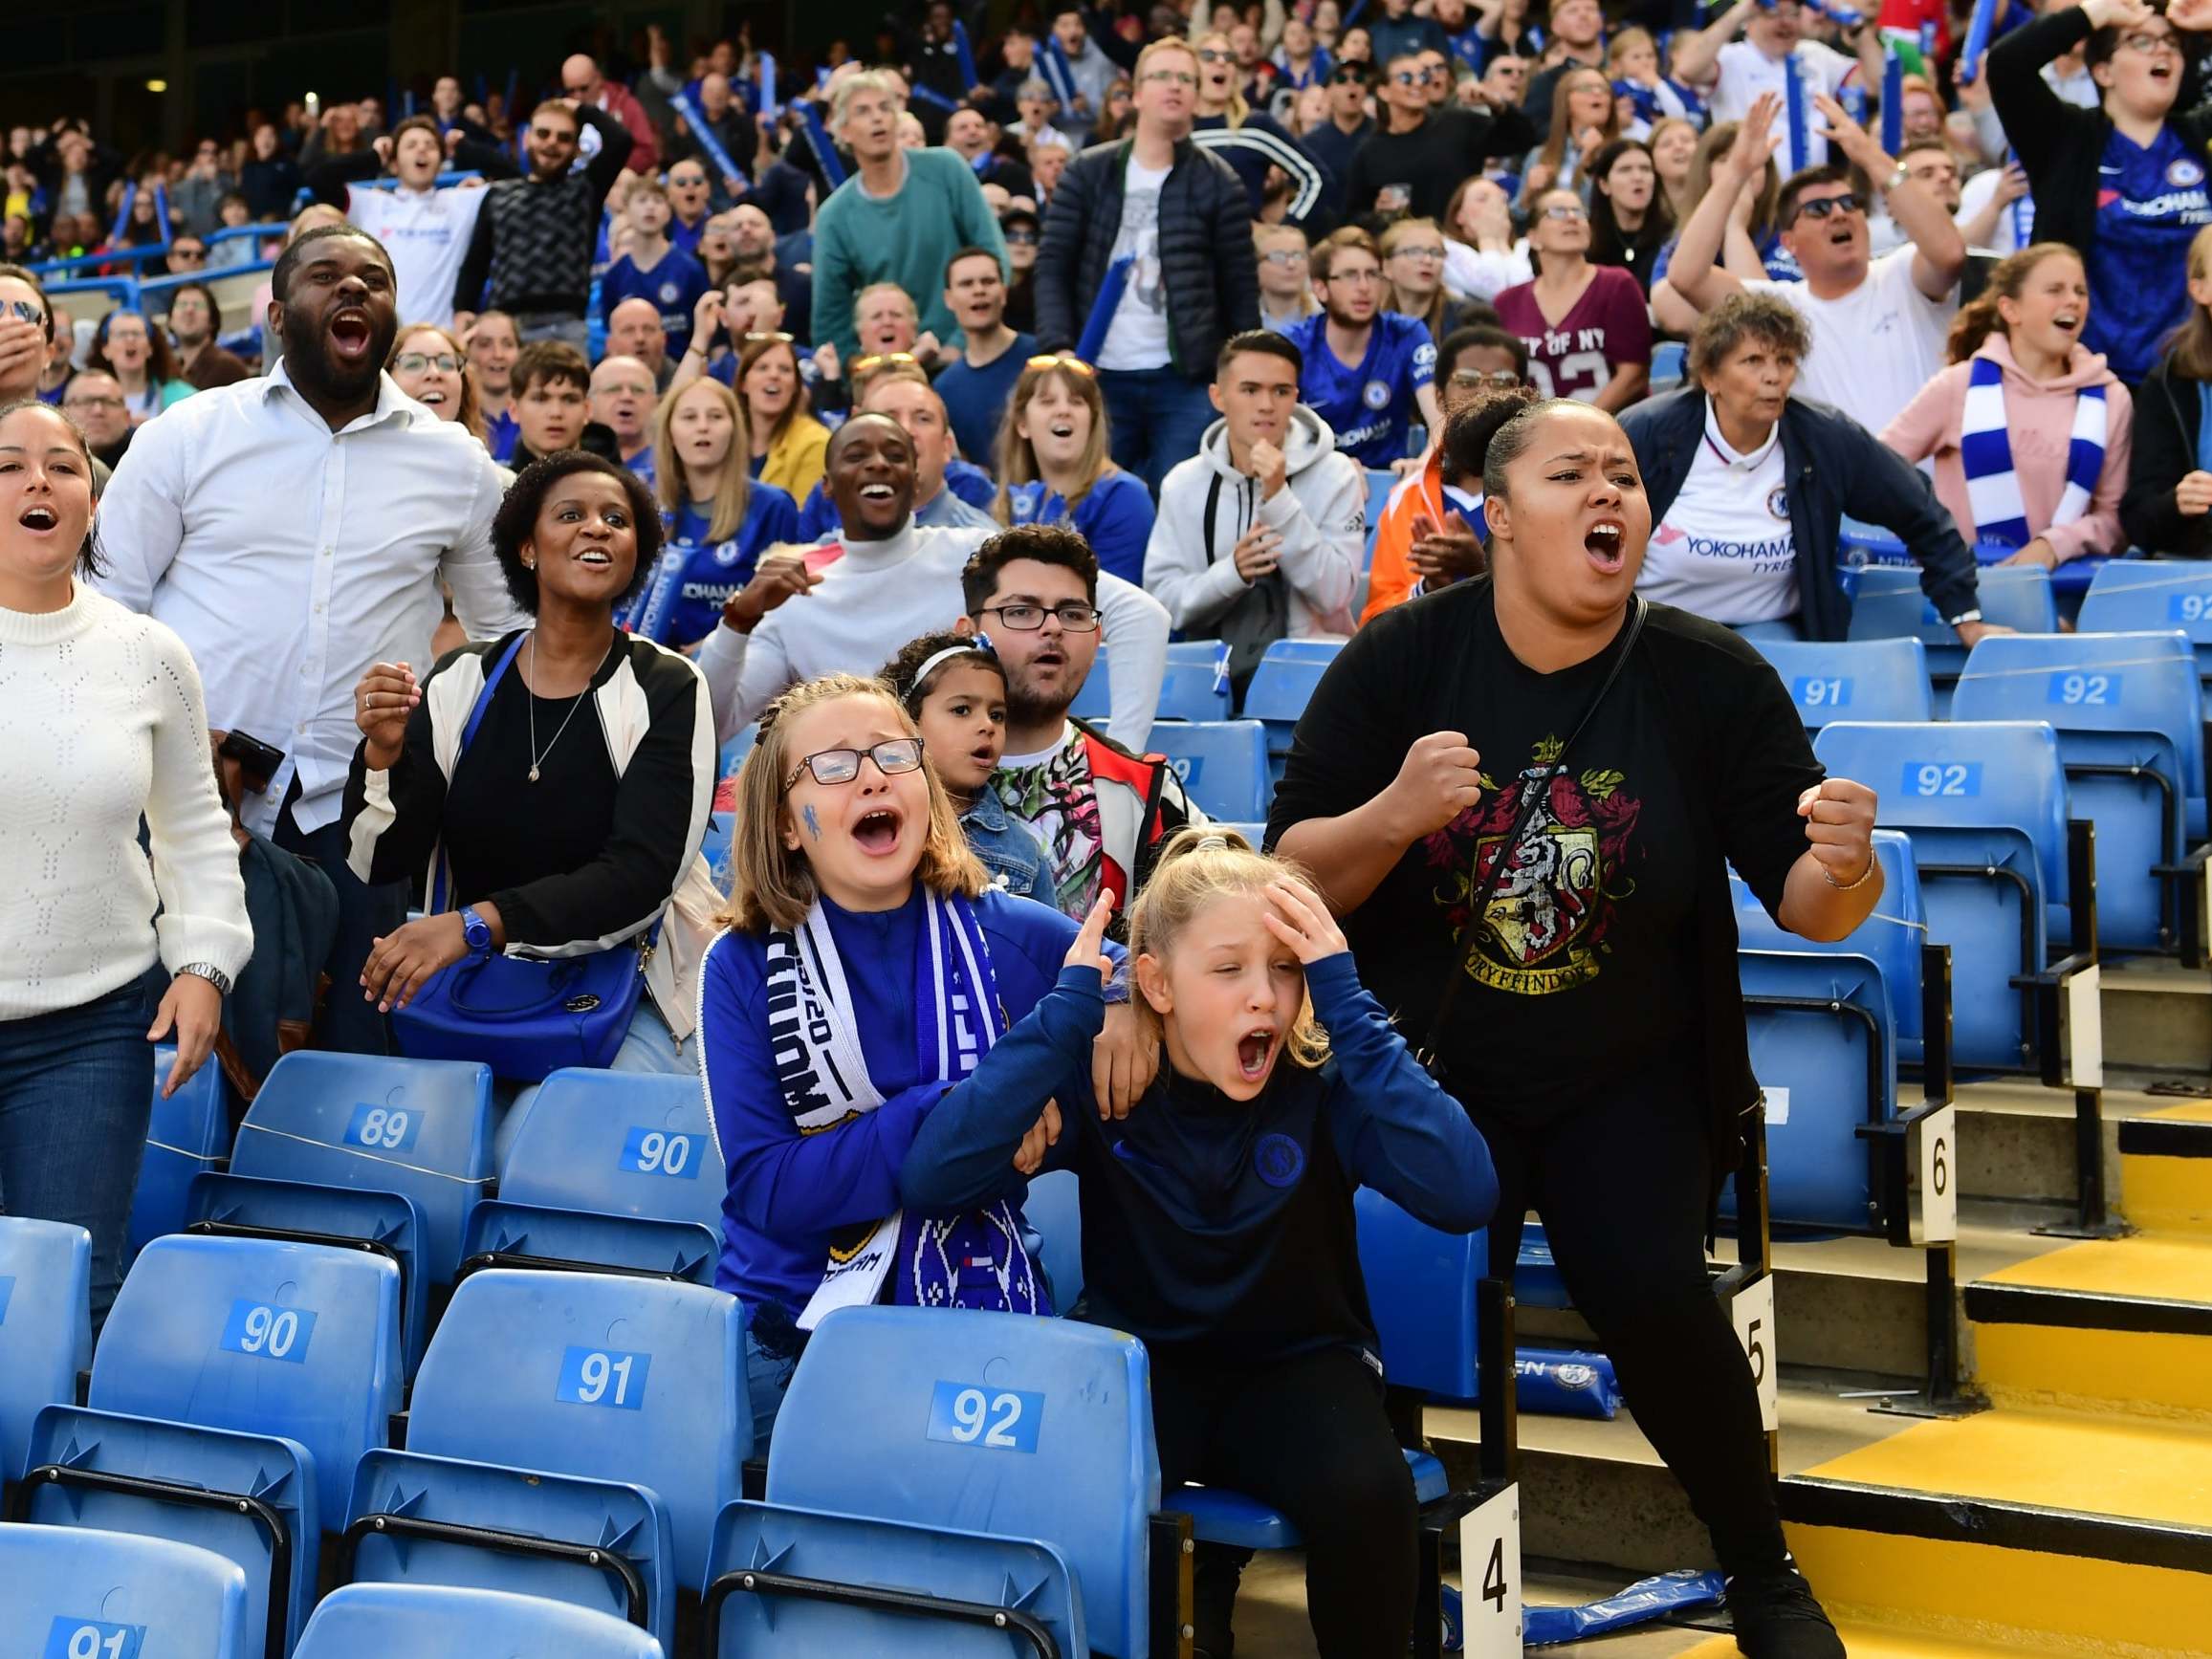 Almost 25,000 fans were in attendance at Stamford Bridge